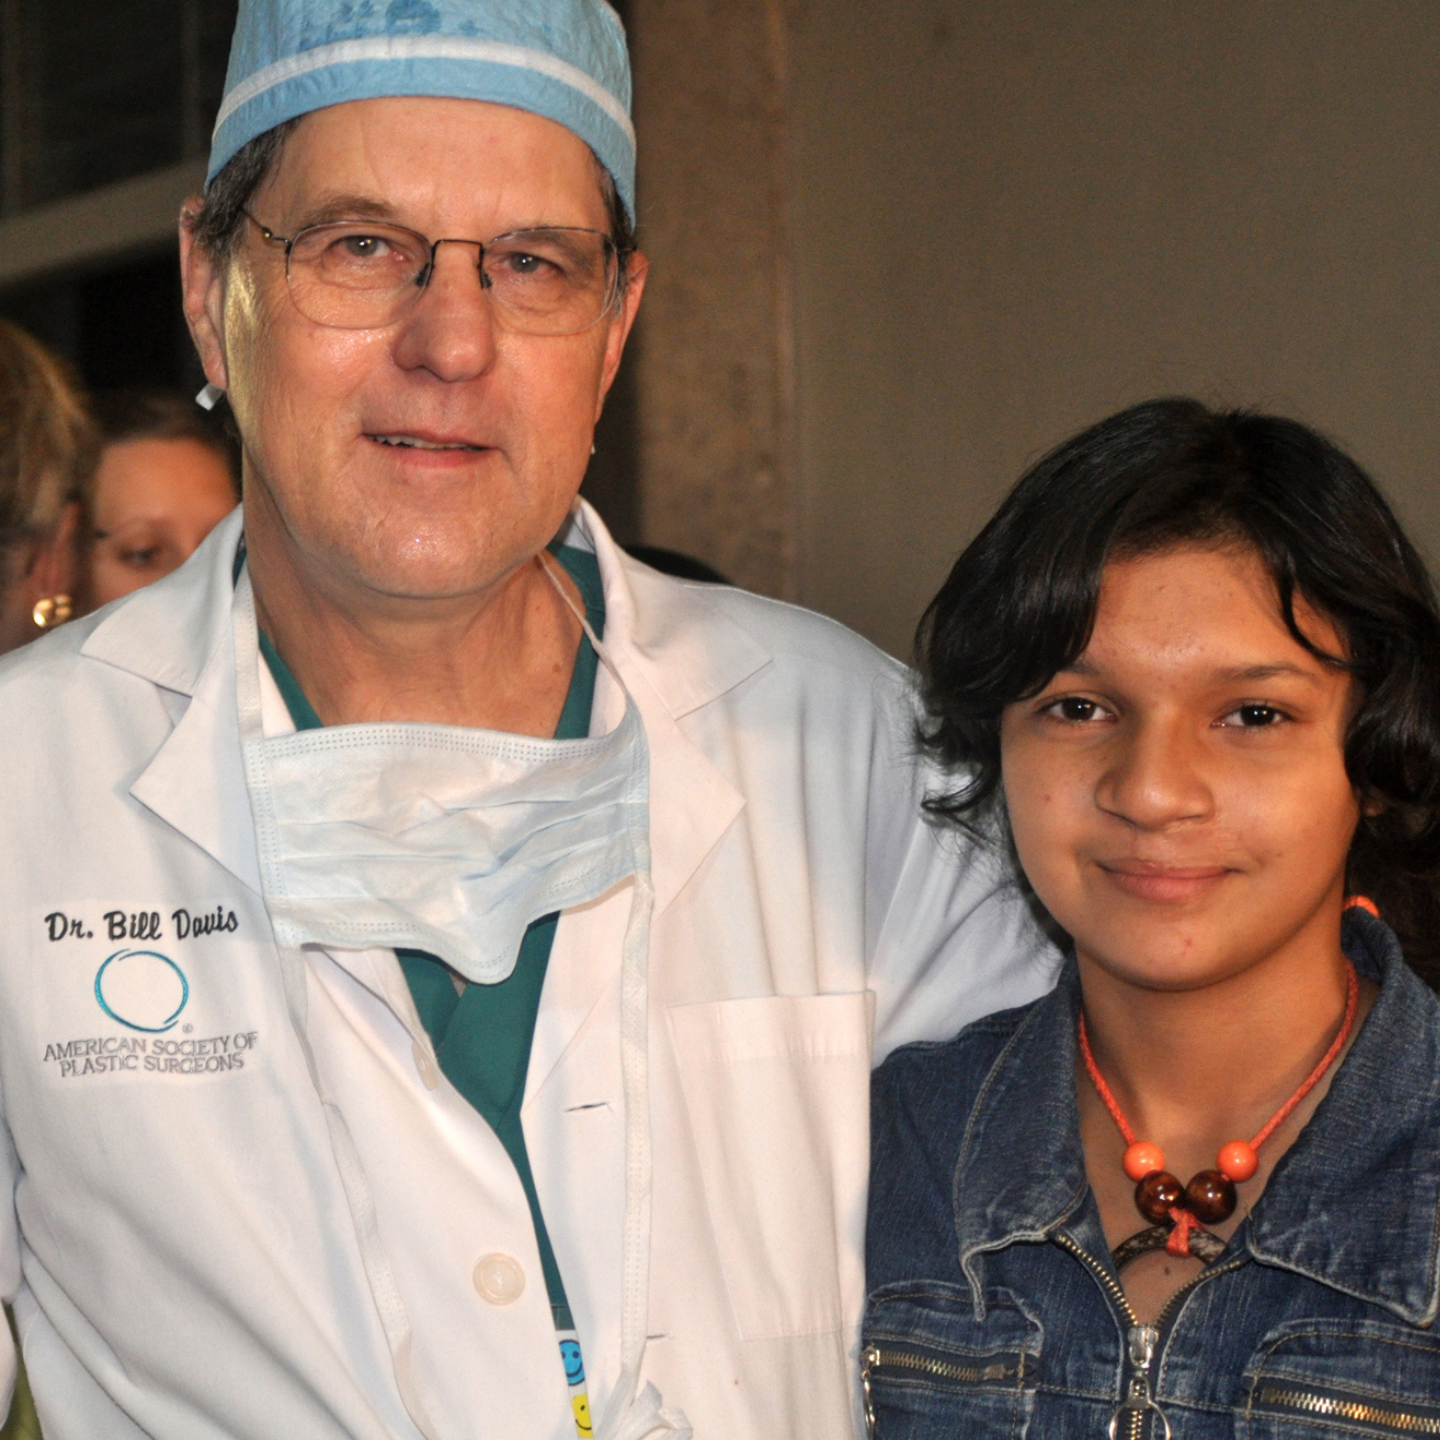 Dr. Bill Davis and a patient